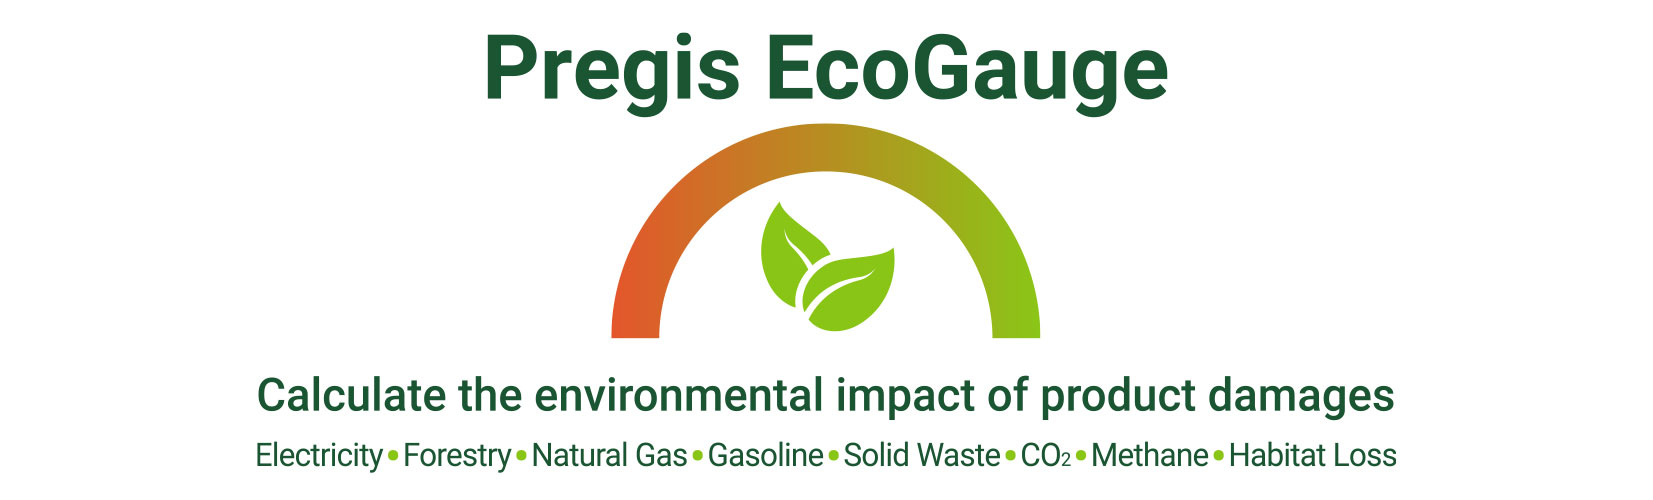 Pregis EcoGauge logo